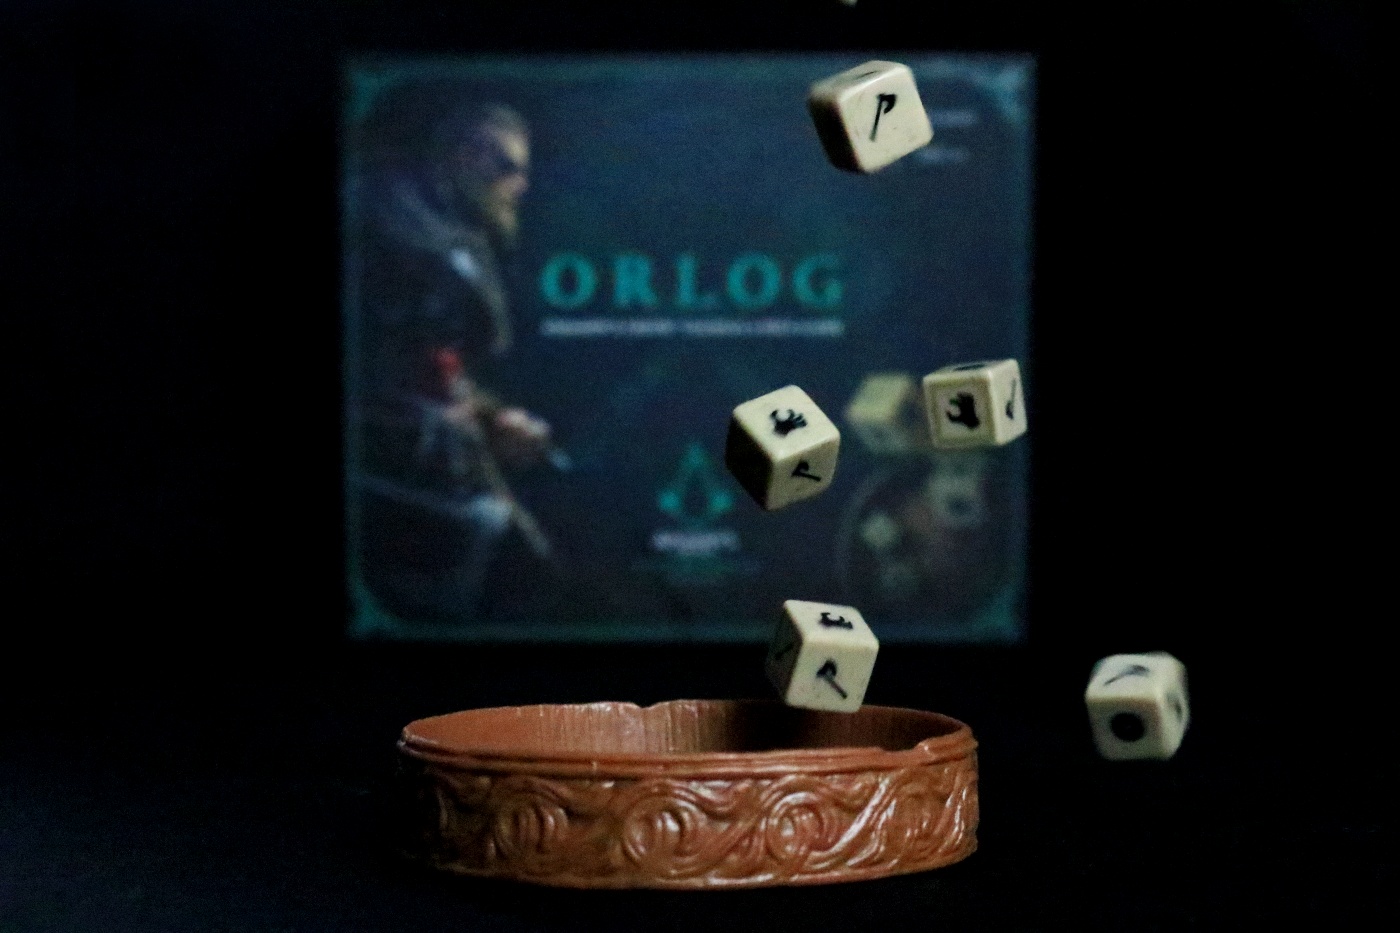 Orlog dice drop